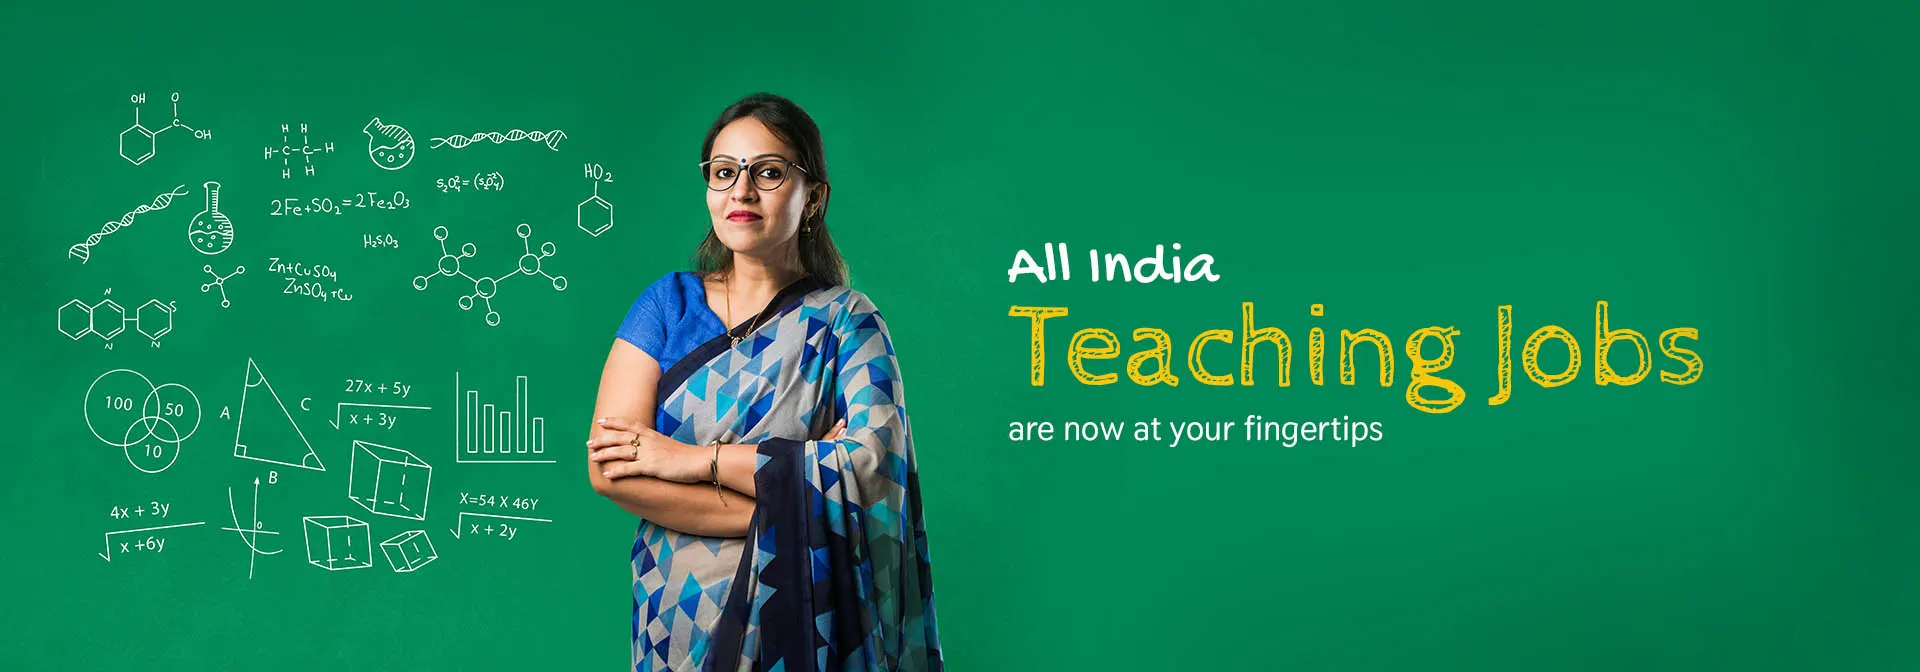 Online teacher job|indiana global teachers